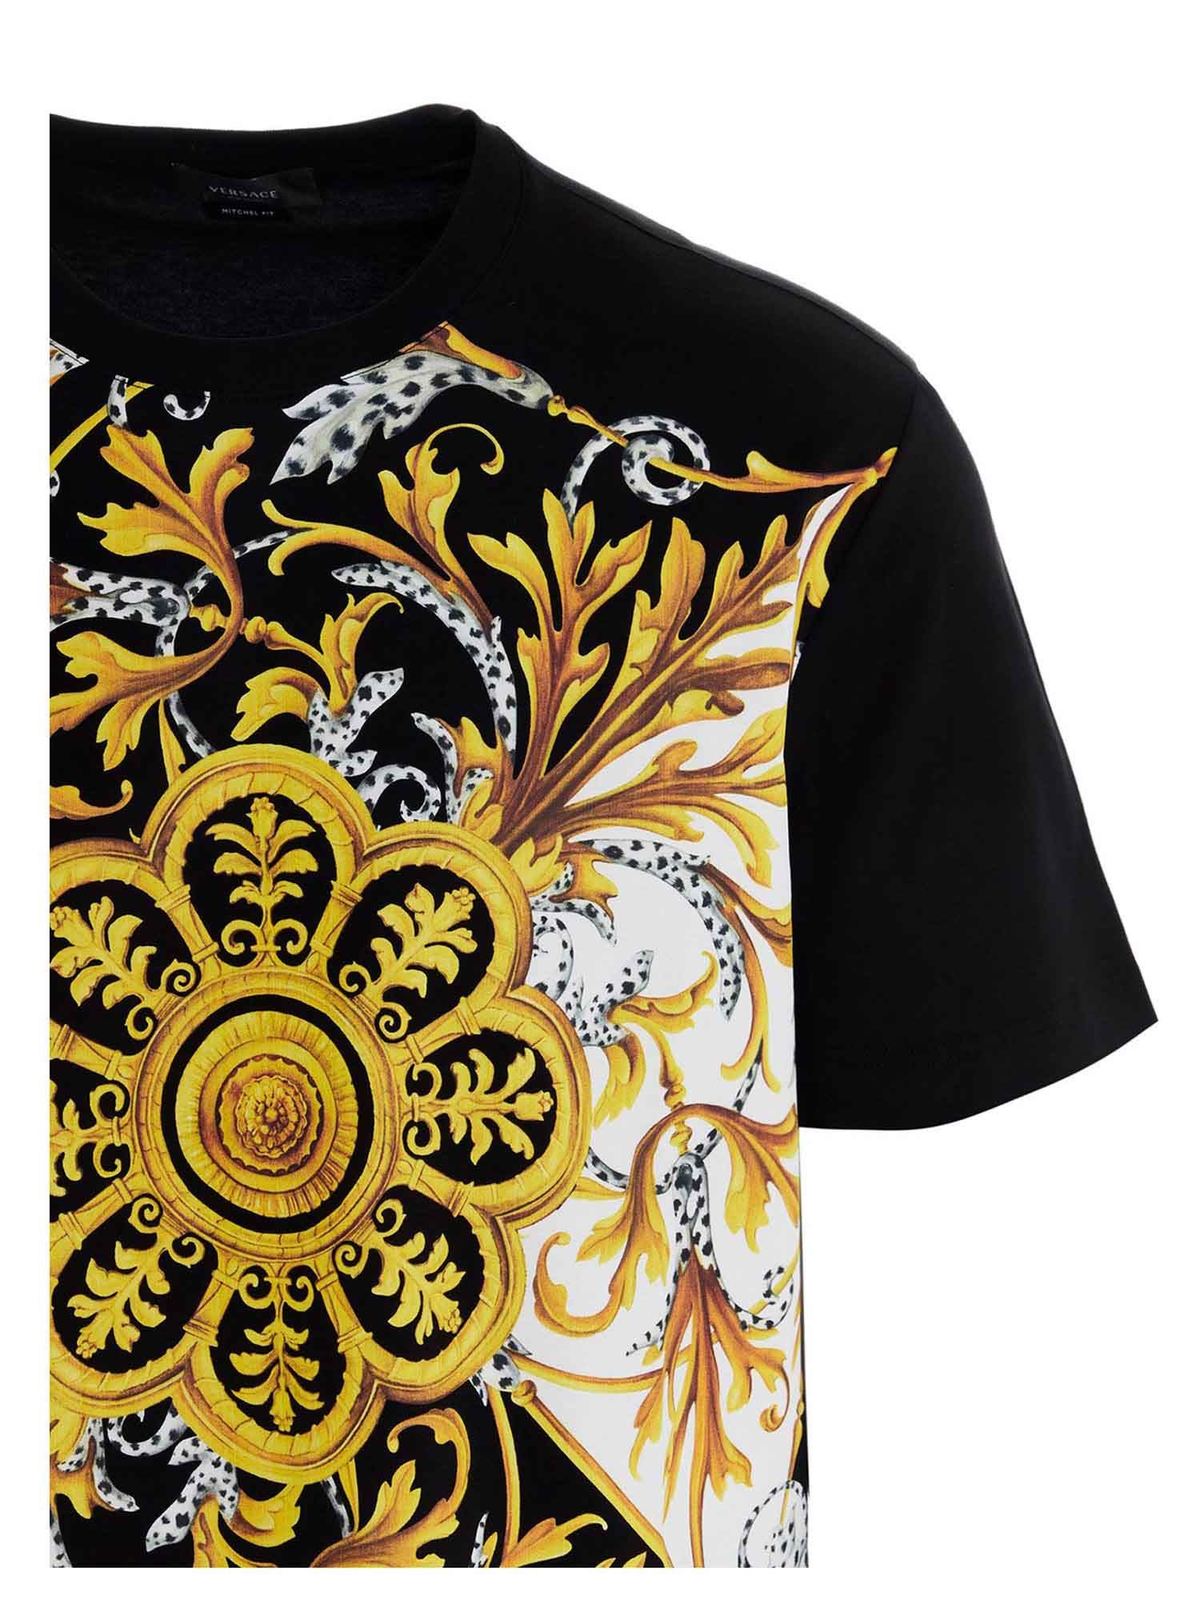 Versace - Barocco print t-shirt in black - t-shirts - A87371A228806A1008